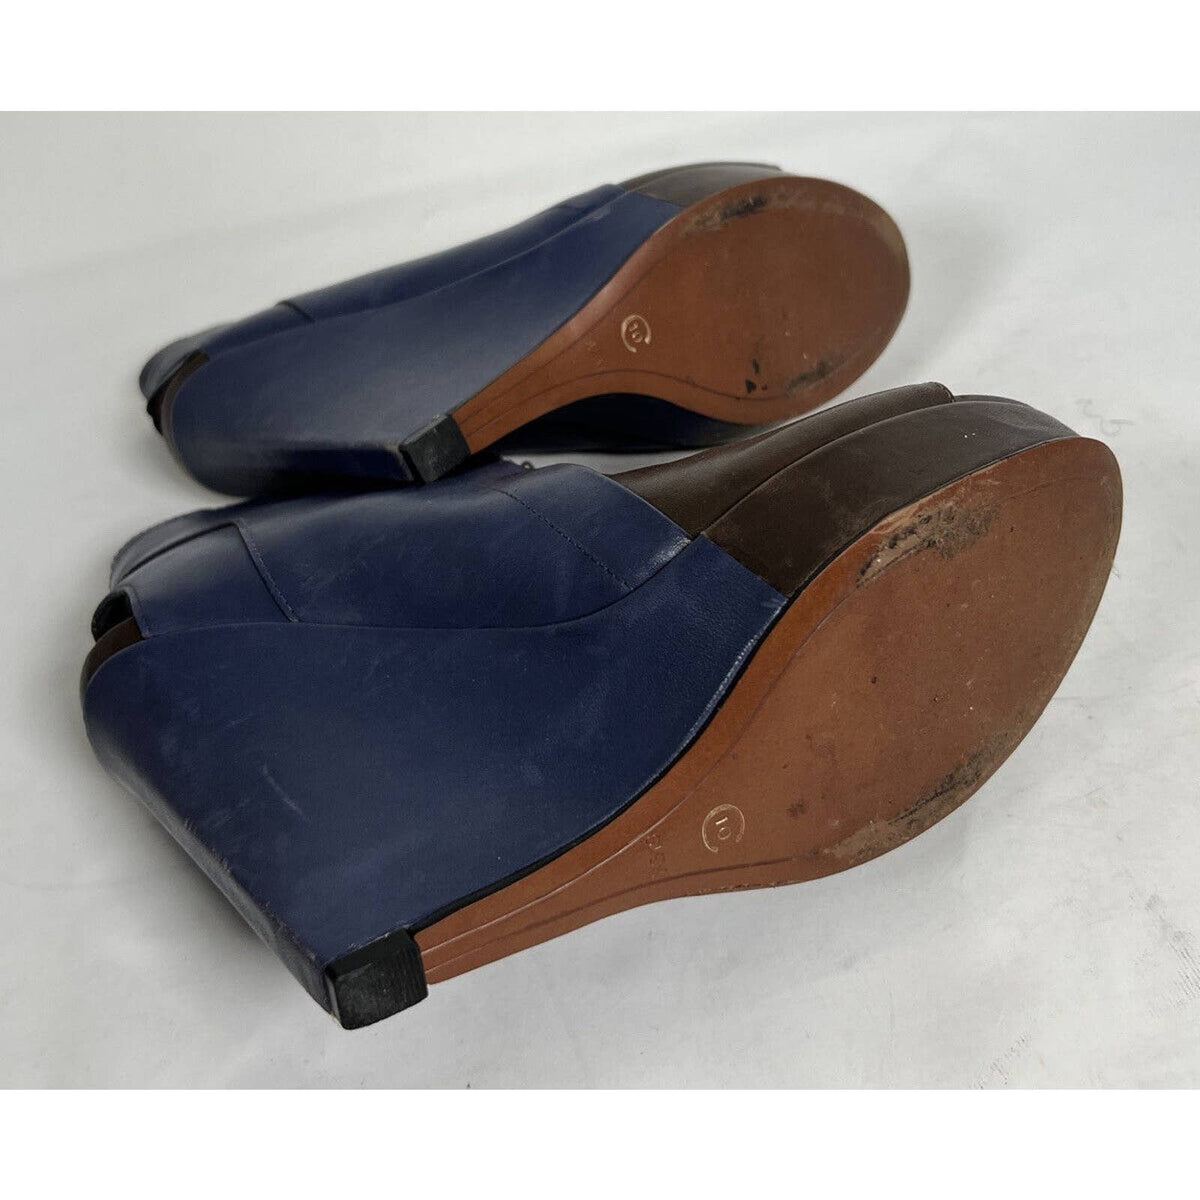 Derek Lam Two Toned Wedge Sandals Sz.8.5 M